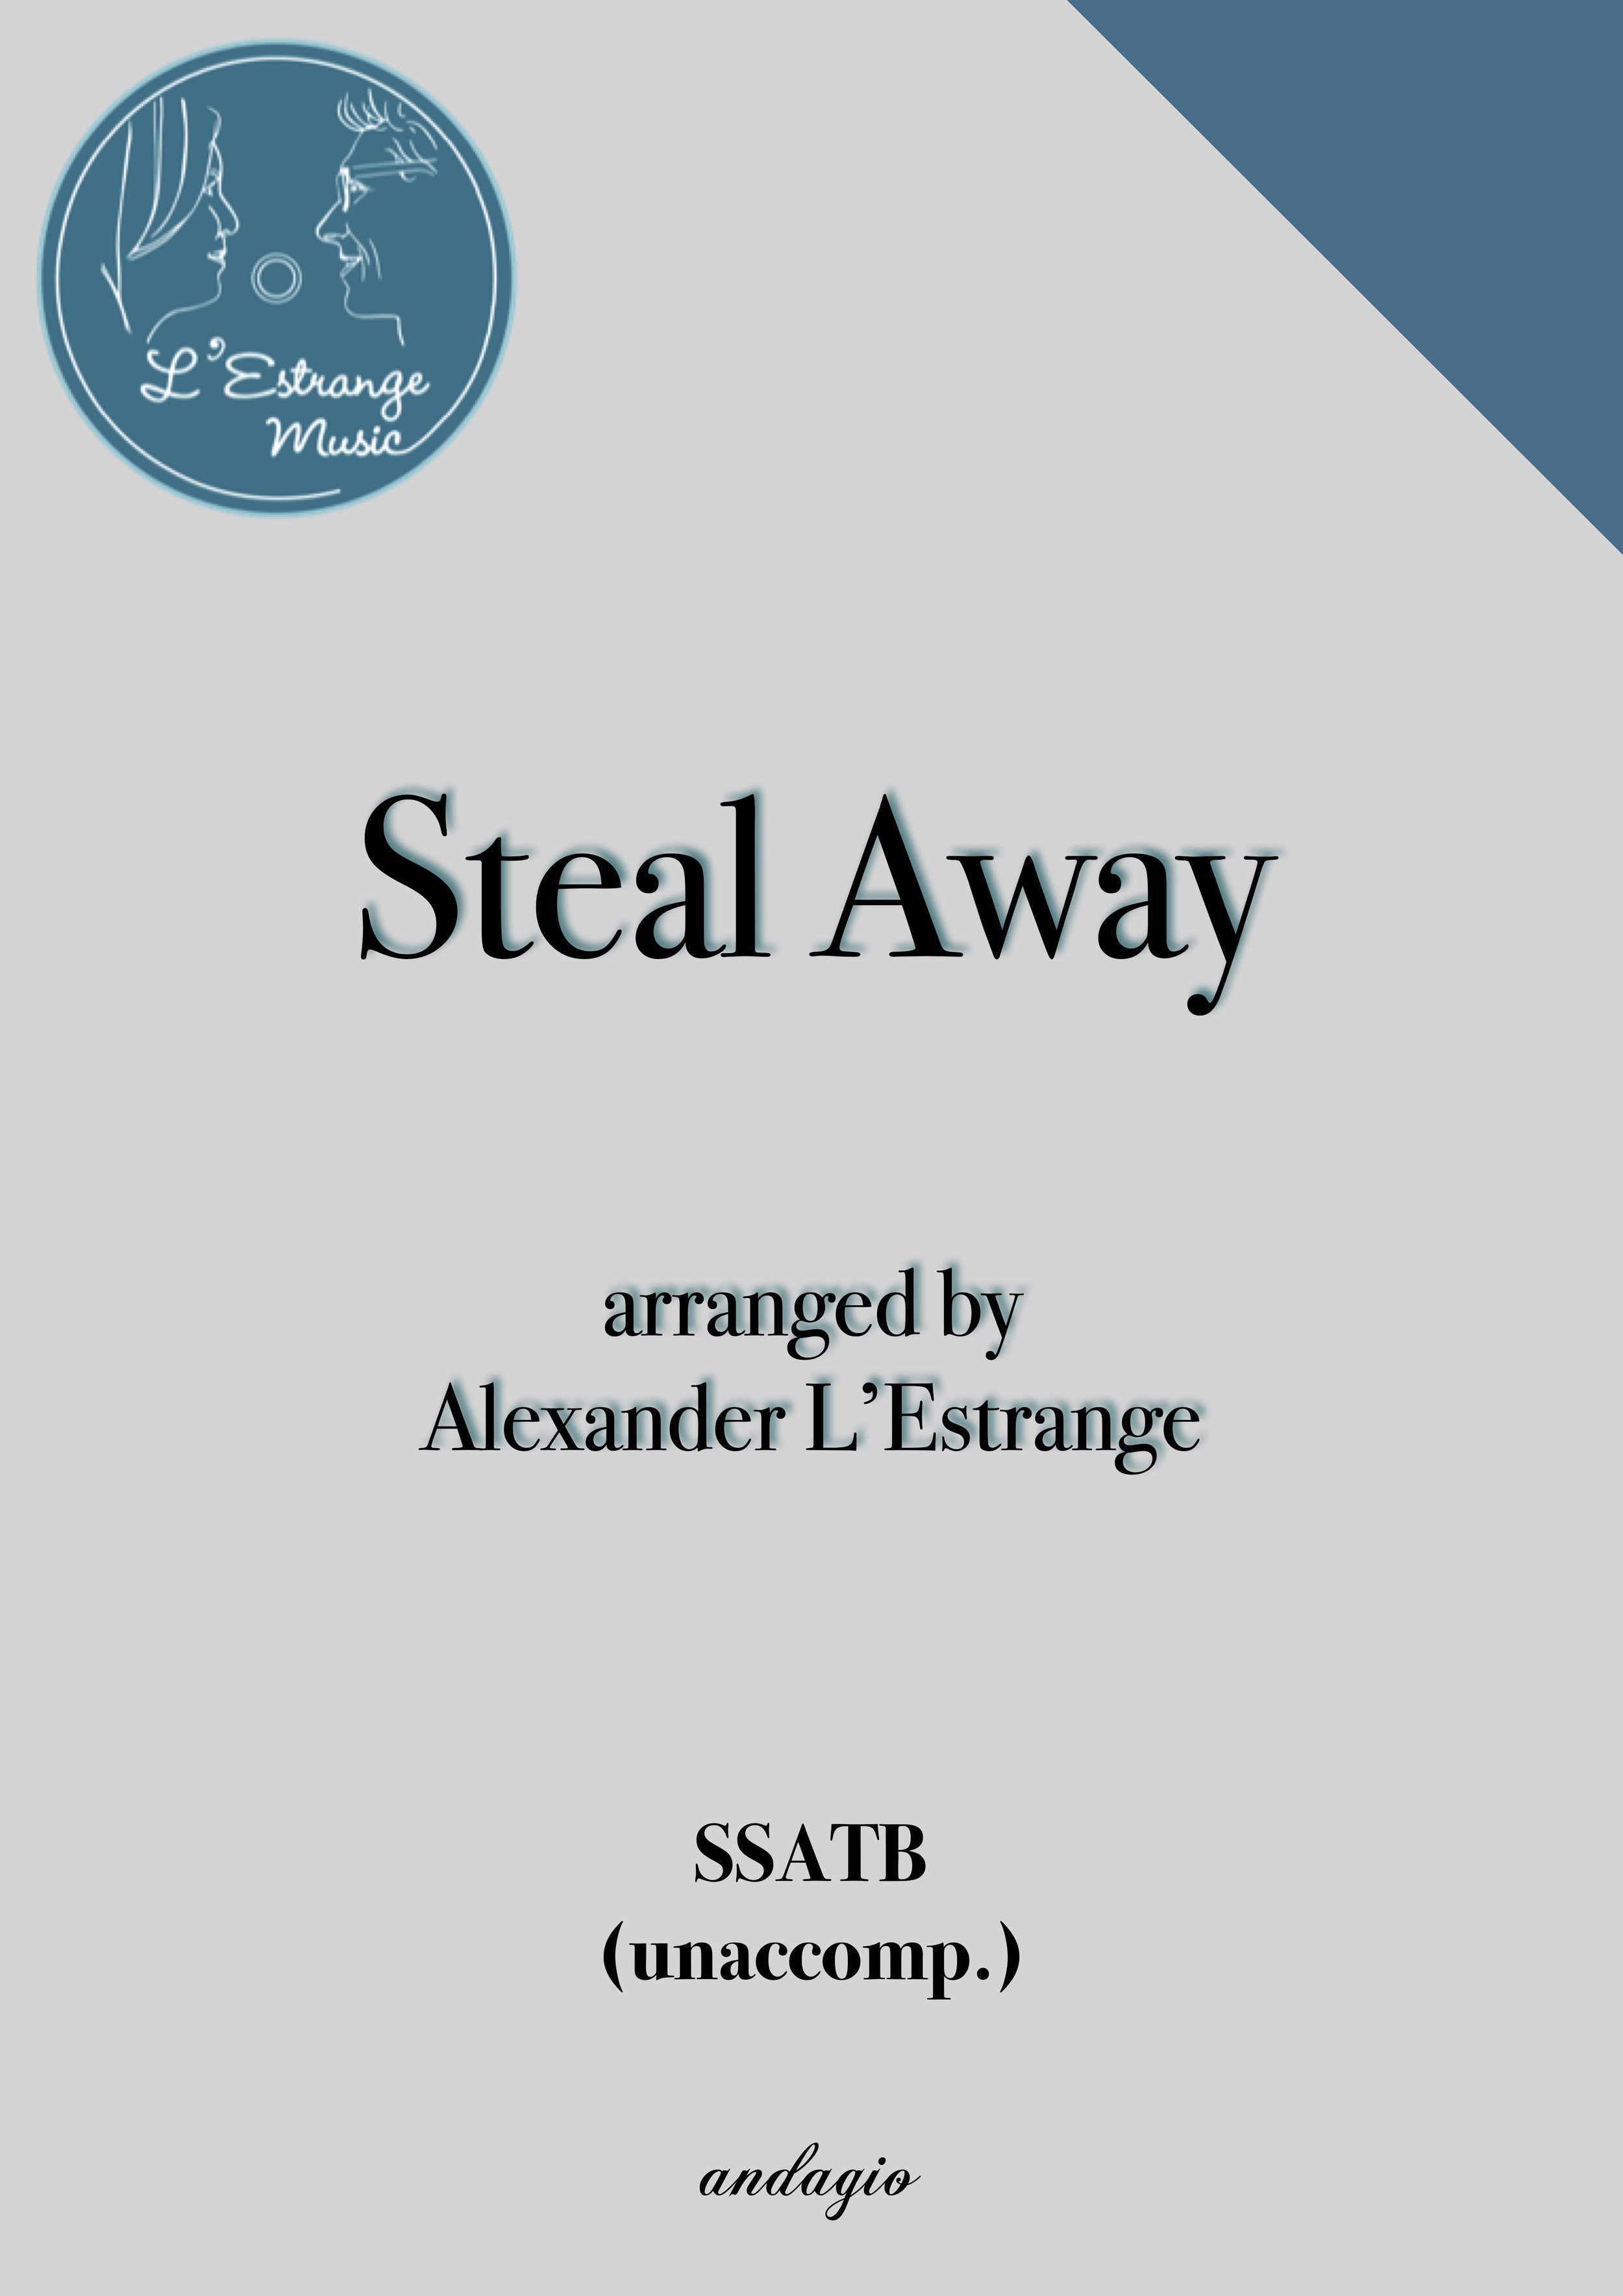 Steal Away arr. Alexander L'Estrange for SSATB unaccompanied.jpg